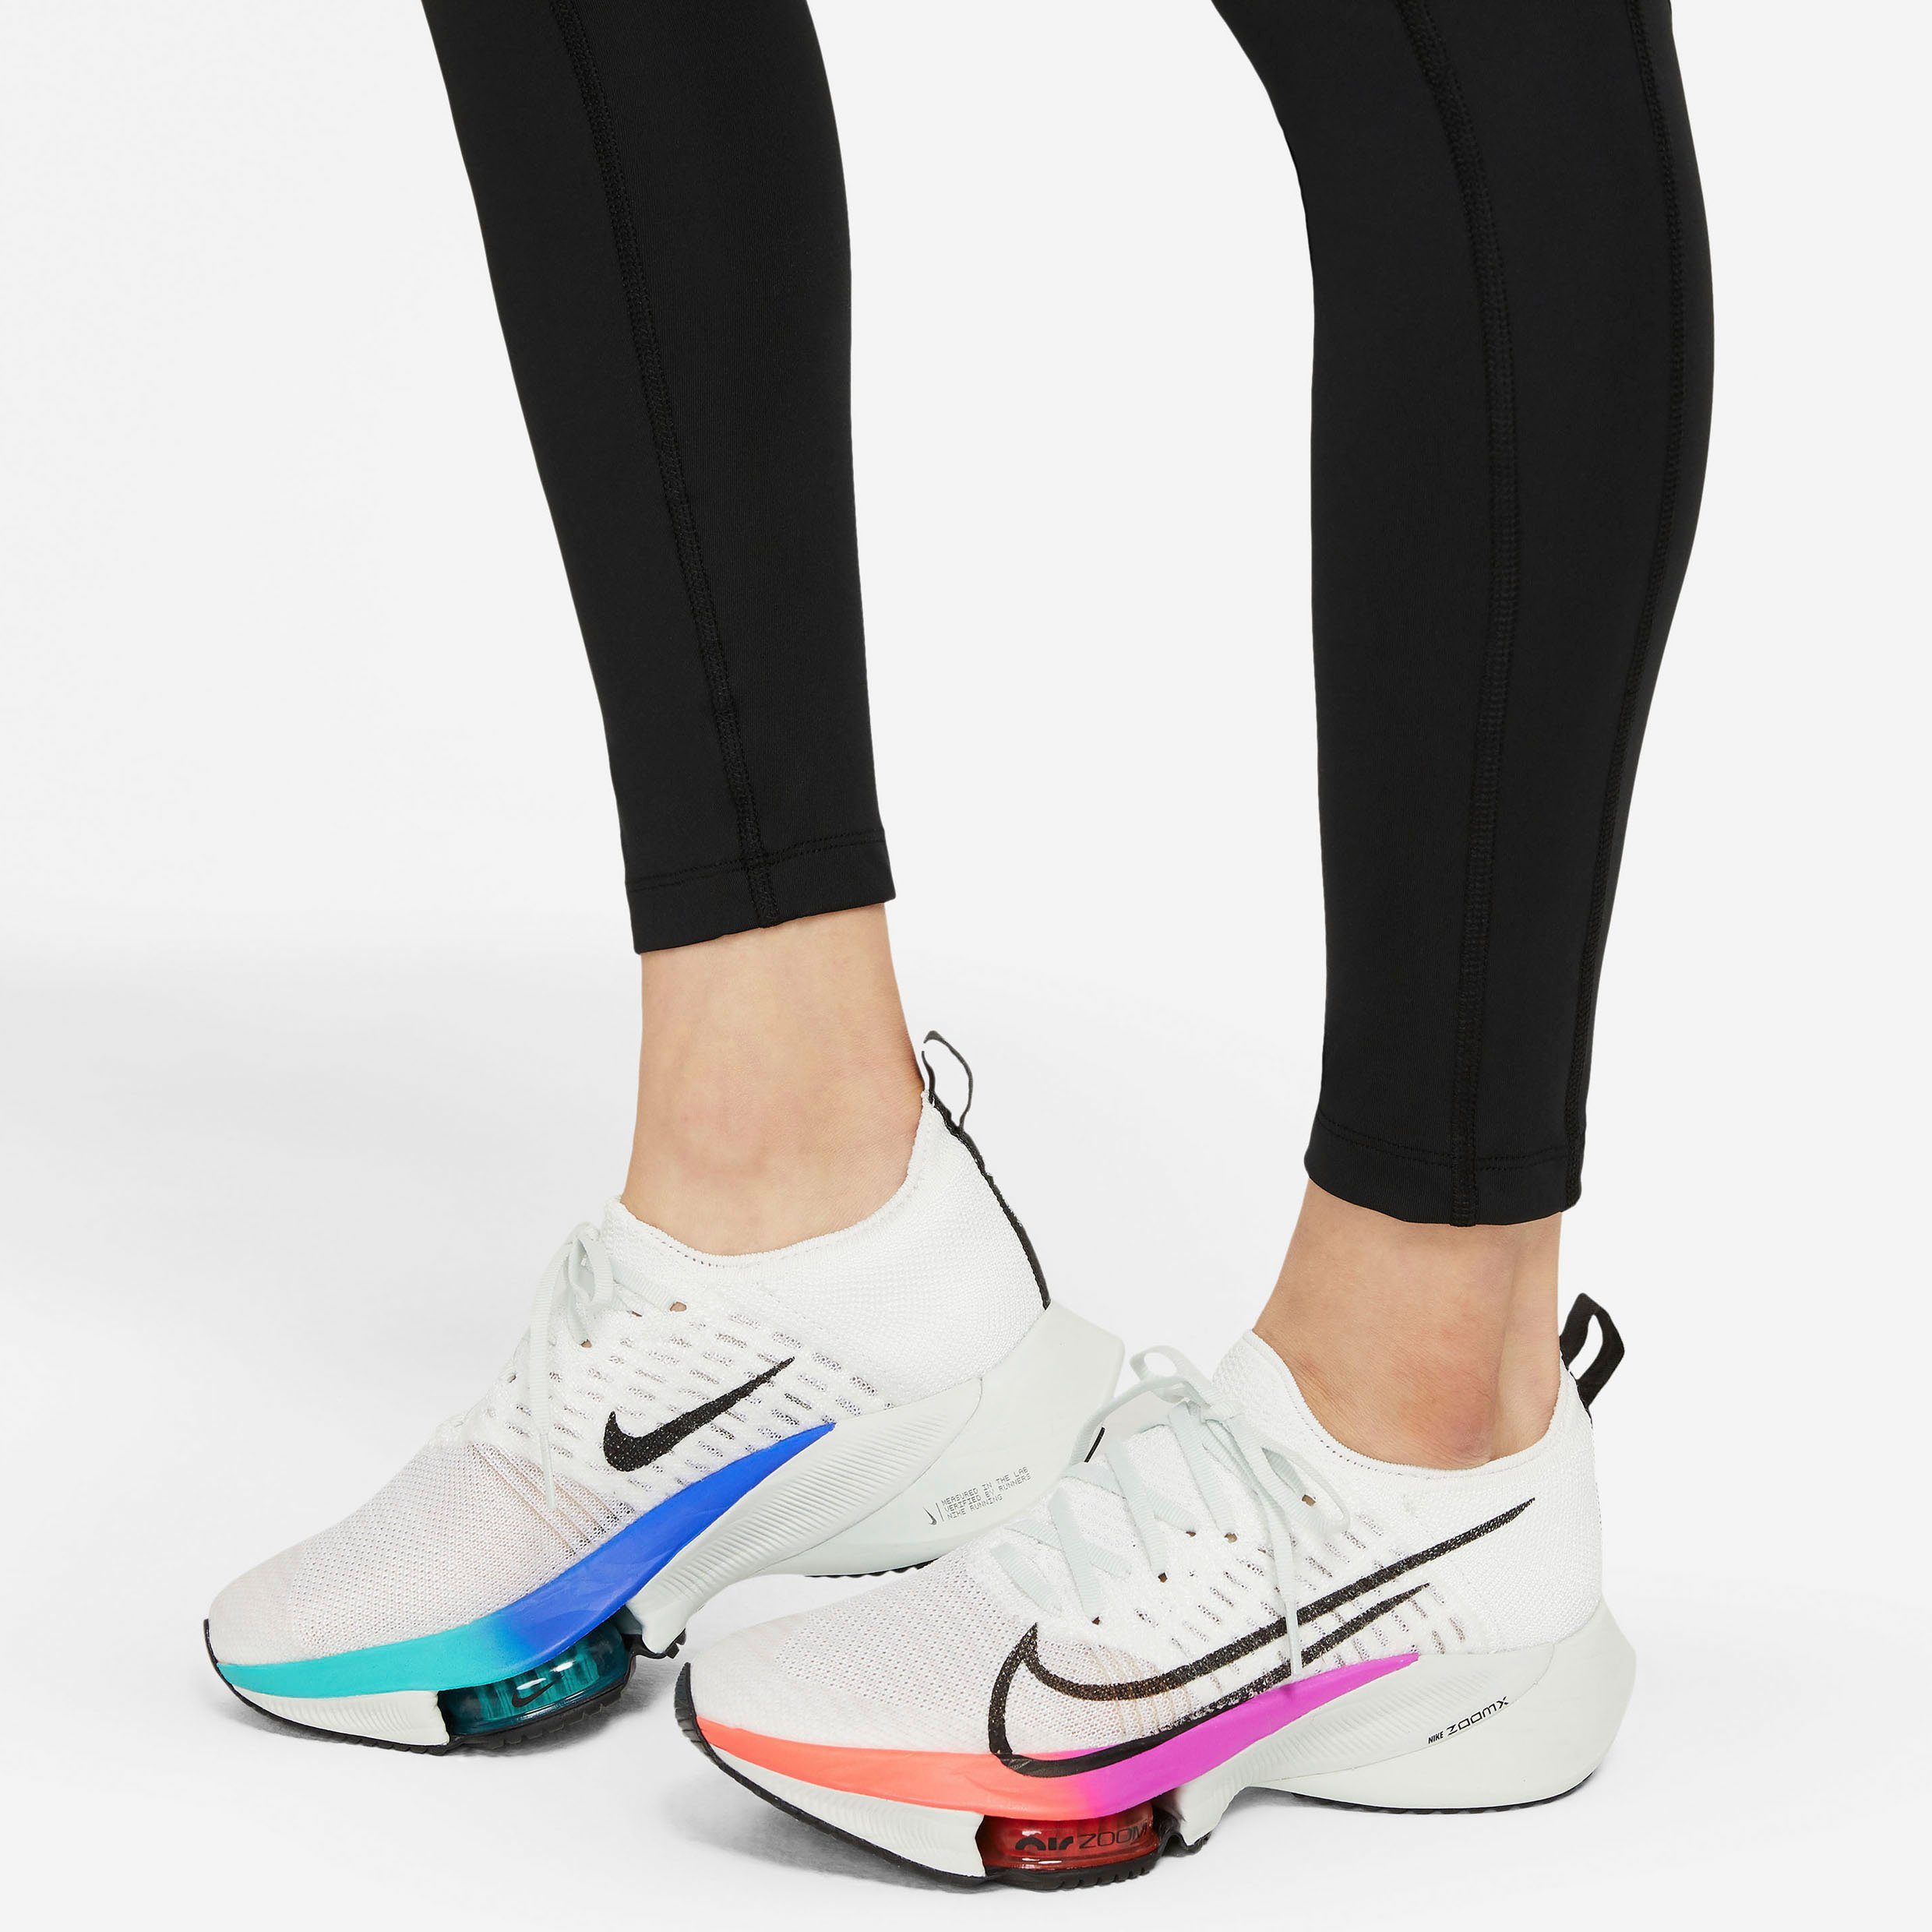 EPIC Lauftights MID-RISE LEGGINGS FAST WOMEN'S Nike POCKET schwarz RUNNING